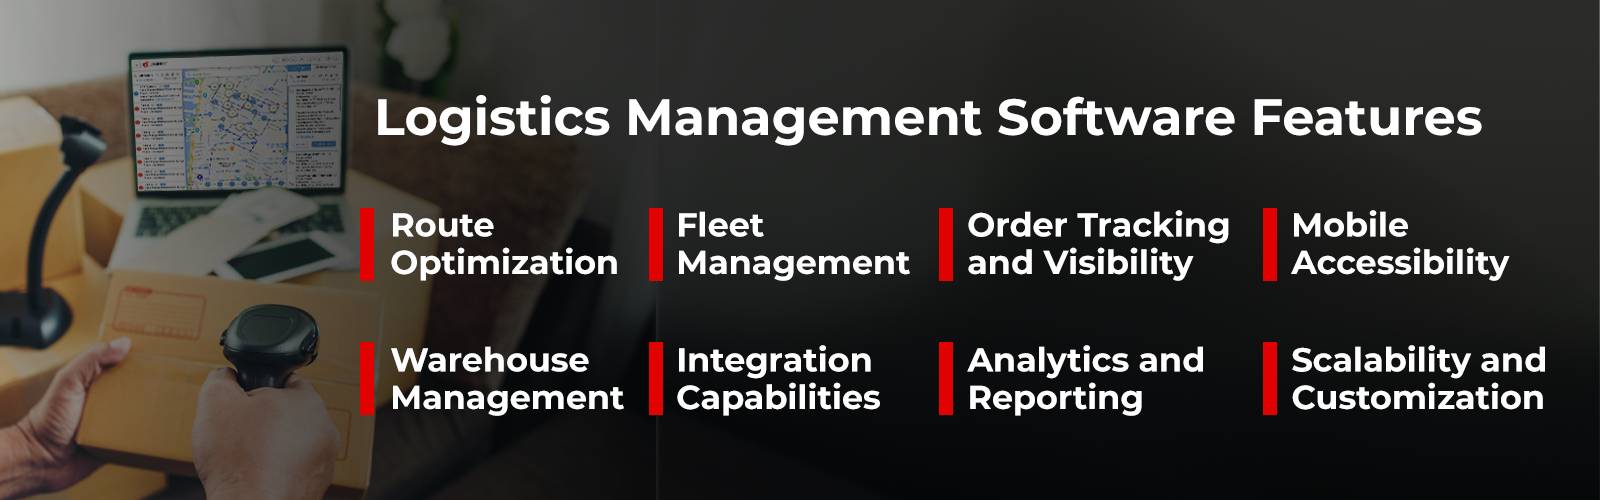 Logistics Management Software Features